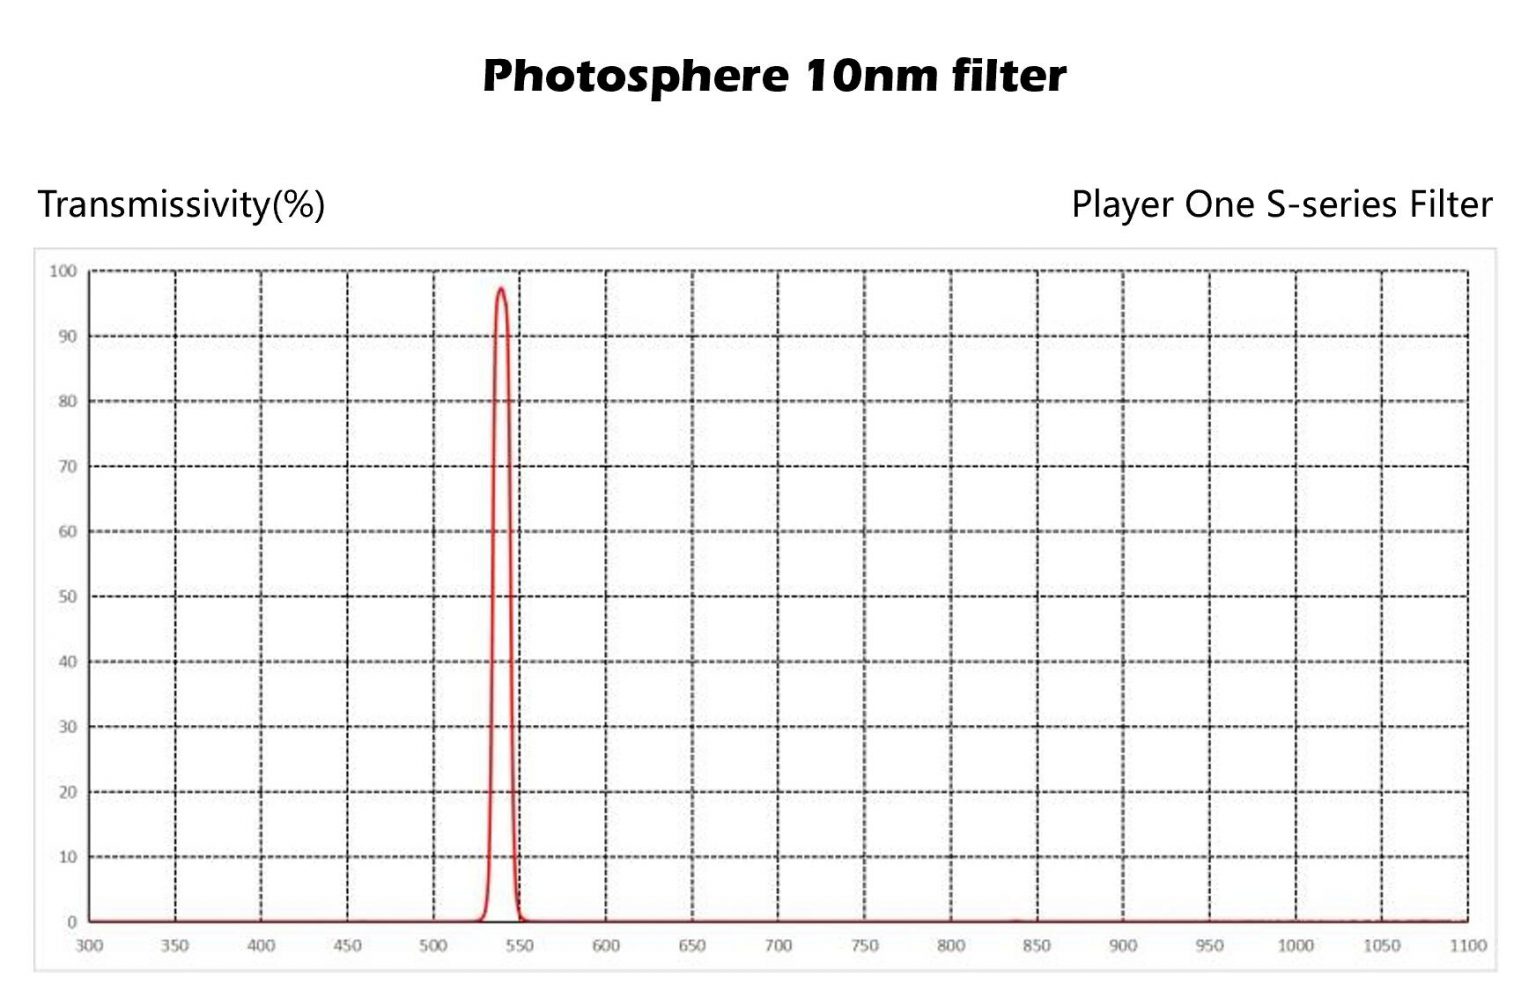   Filtro Player One Photosphere 10nm da 31,8mm   